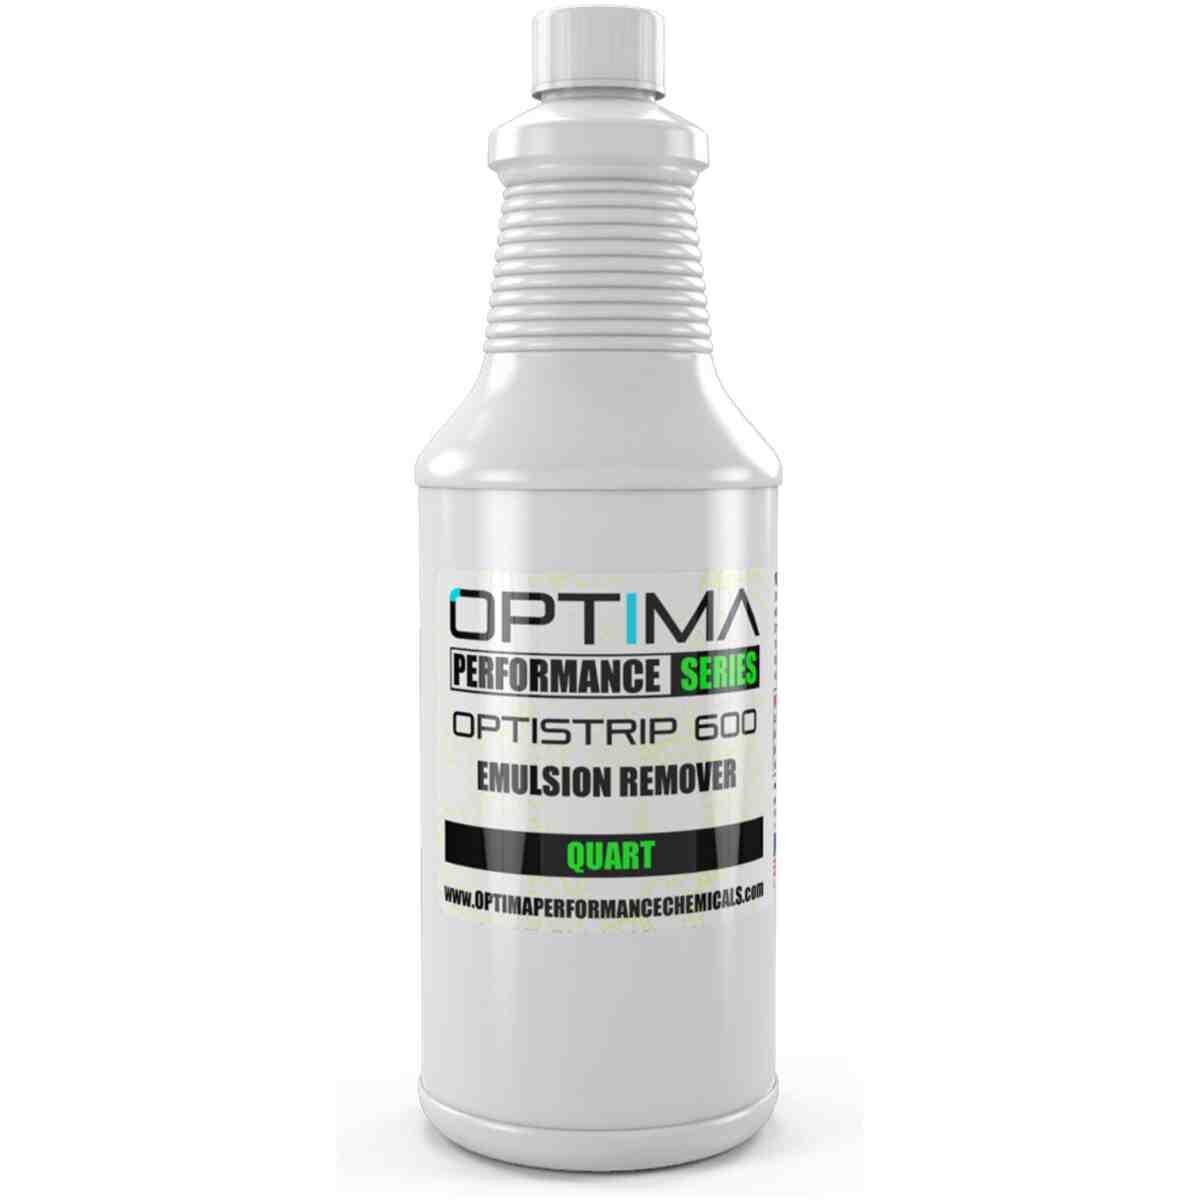 Opti-strip 600 - Emulsion Remover OPTIMA PERFORMANCE SERIES®